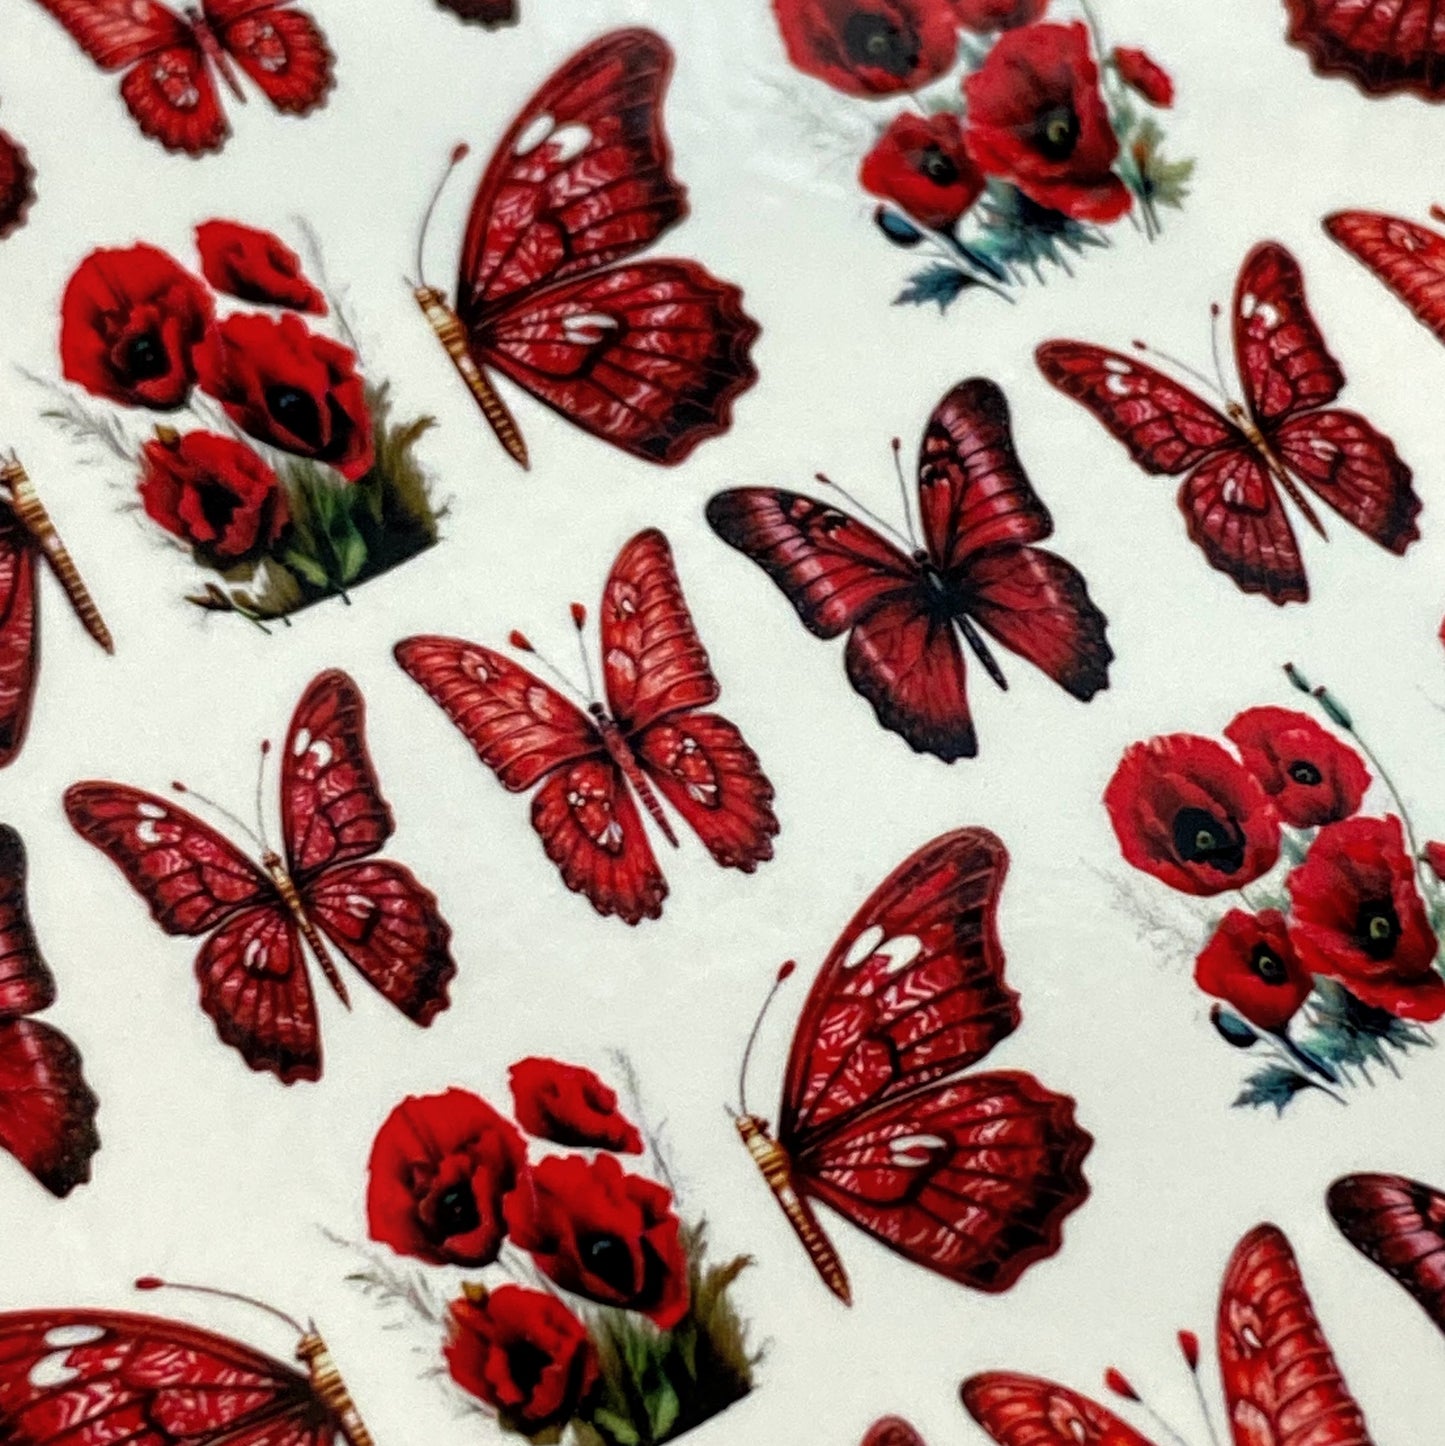 Memorial Day Nail Art - Sacrifice Butterflies  - Decals For Nails